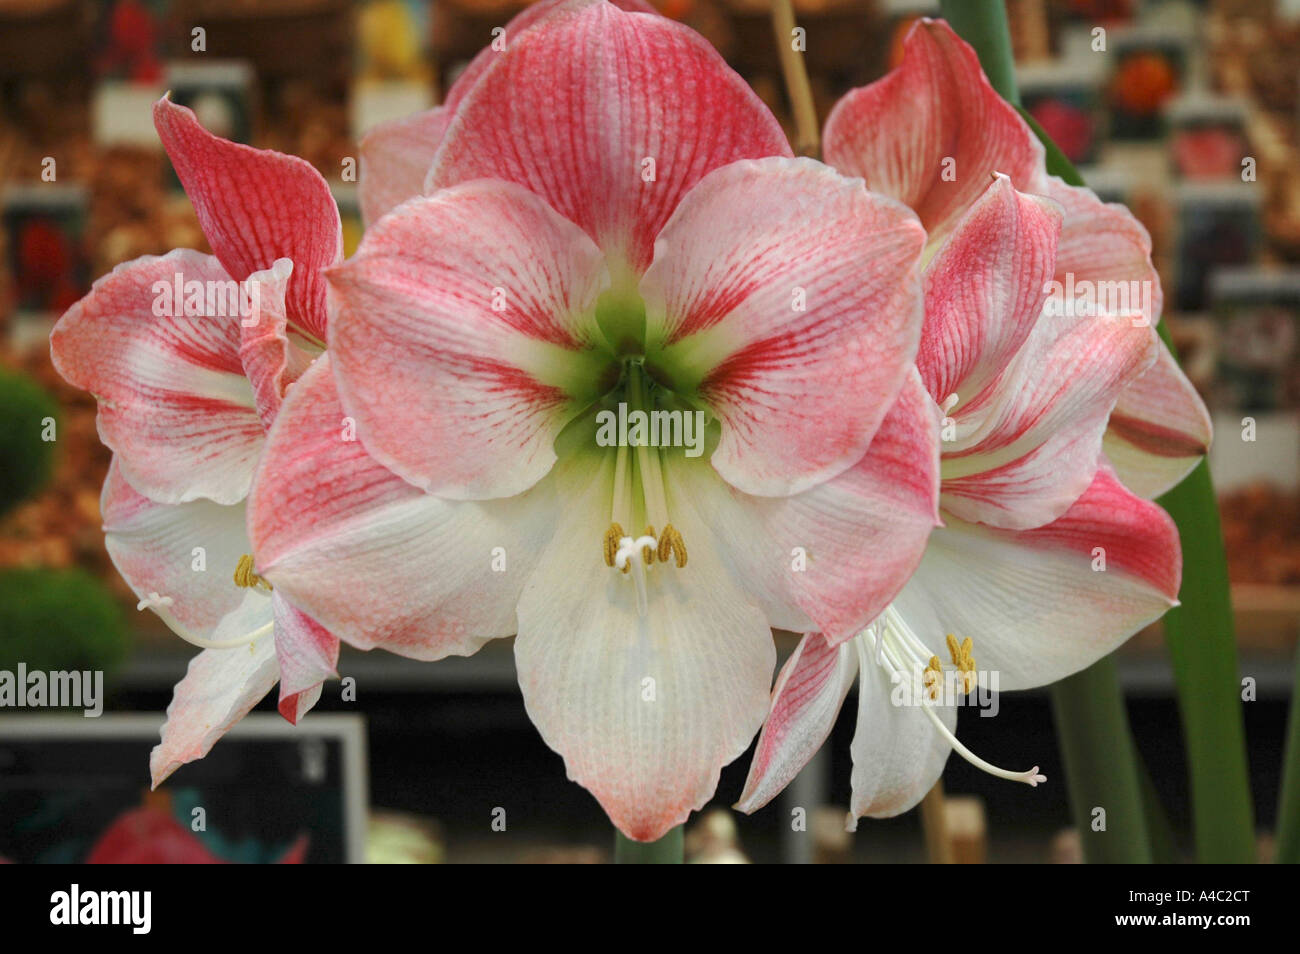 Amarylis in Amsterdam flower market Stock Photo